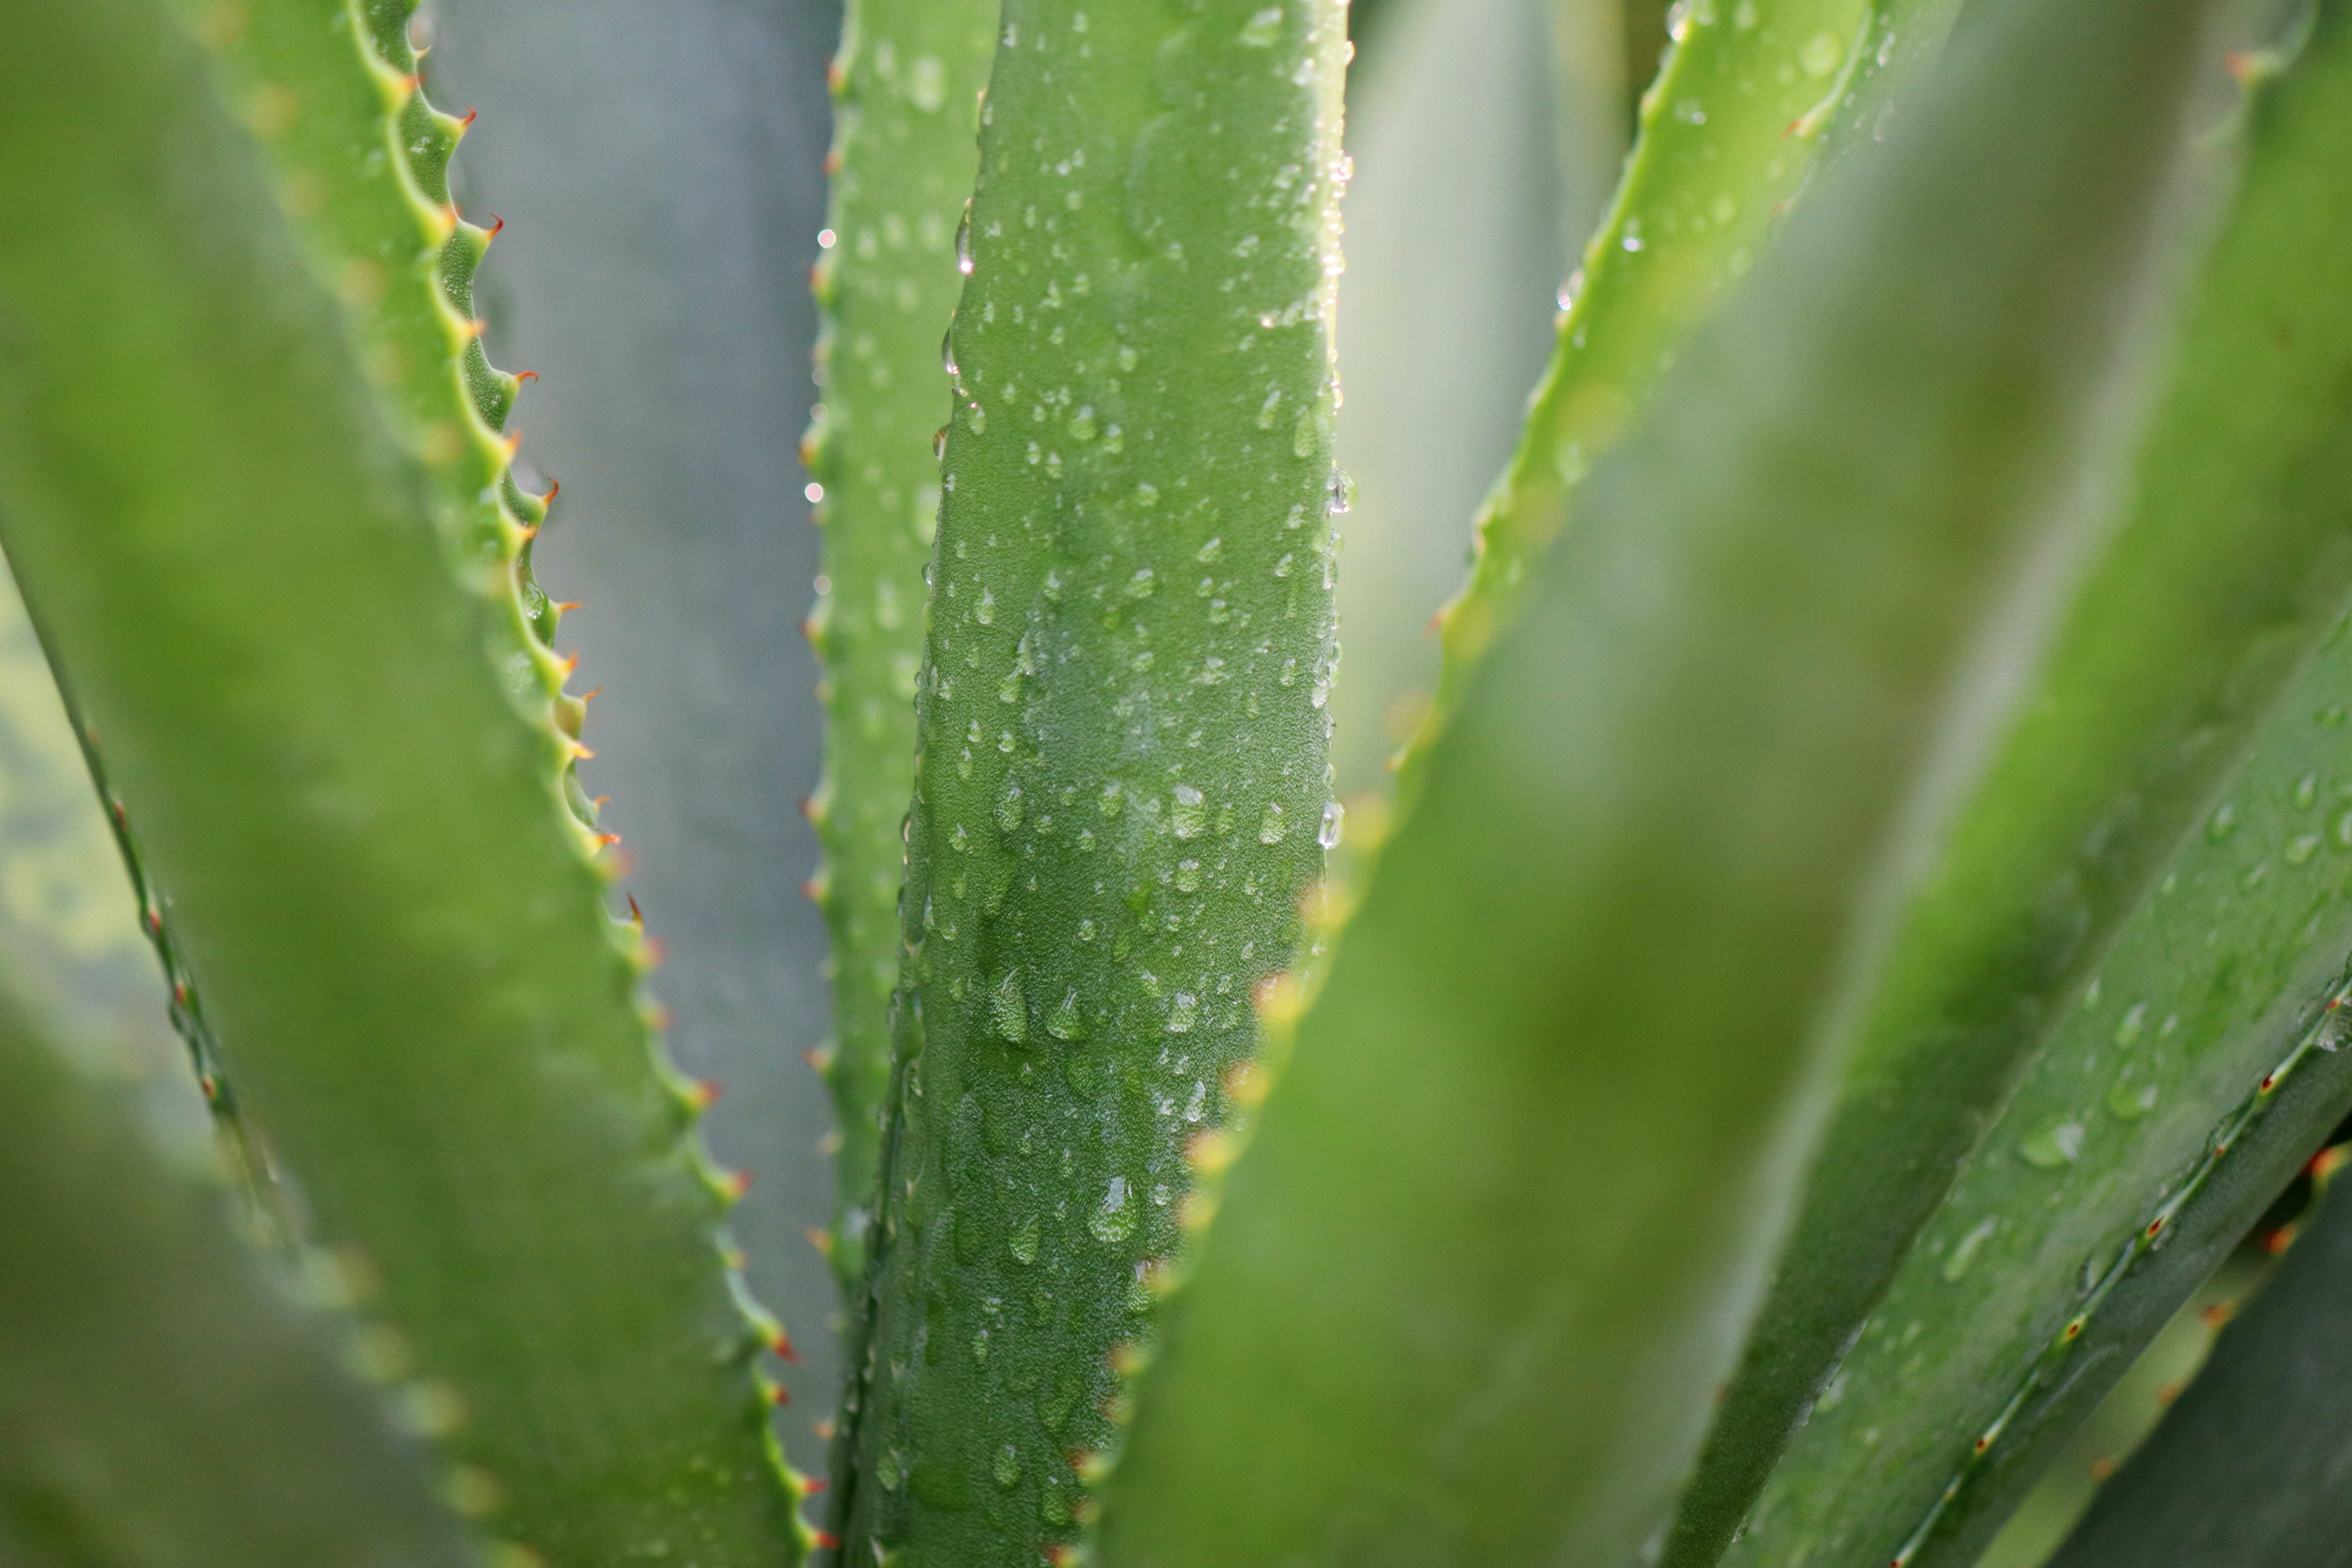 Dewdrops trickling down the aloe vera plant. | Source: Pexels